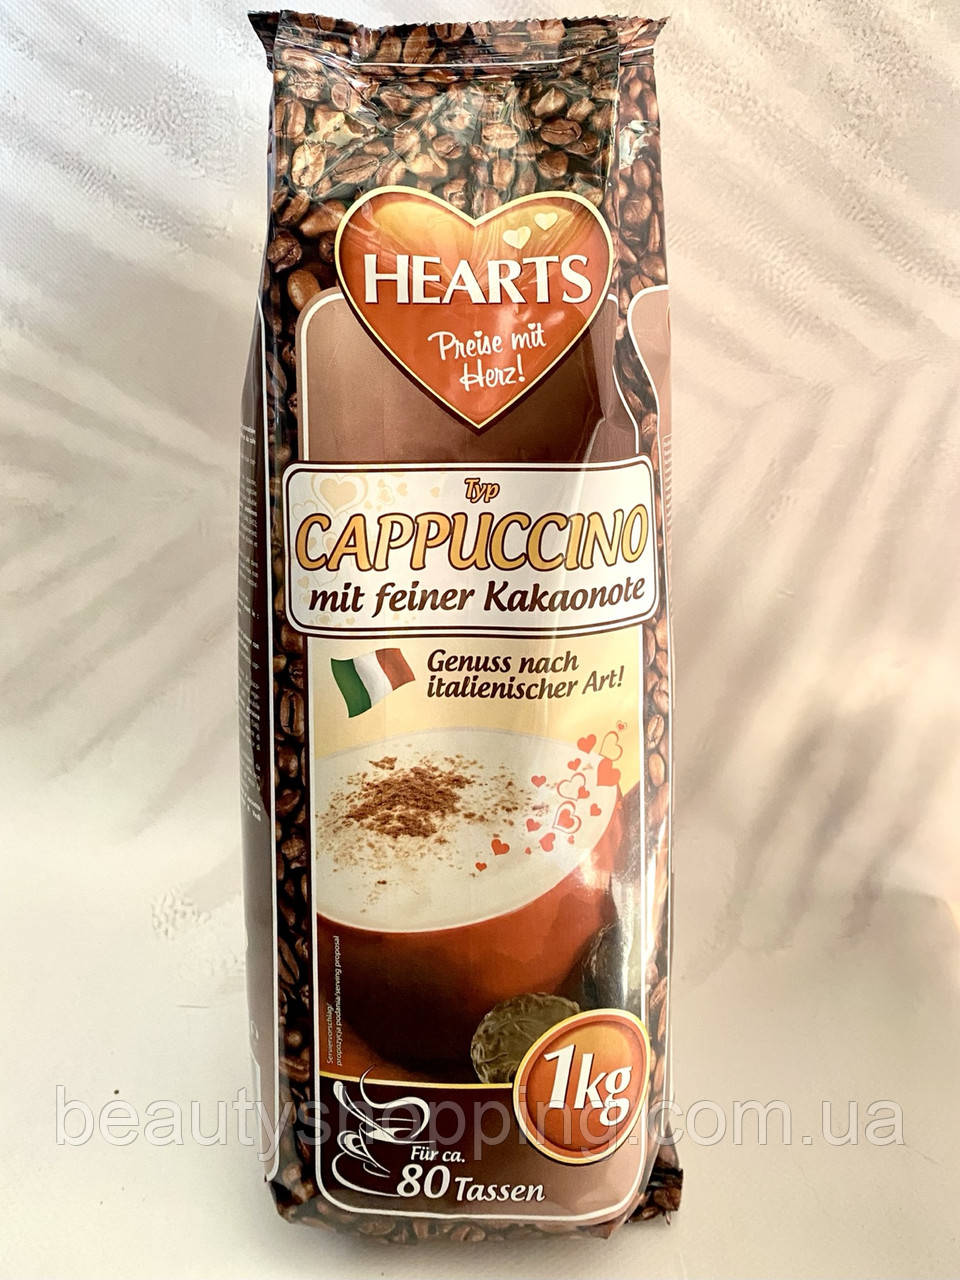 Hearts Capuccino mit feiner Kakaonote капучино шоколадний смак 1kg Німеччина